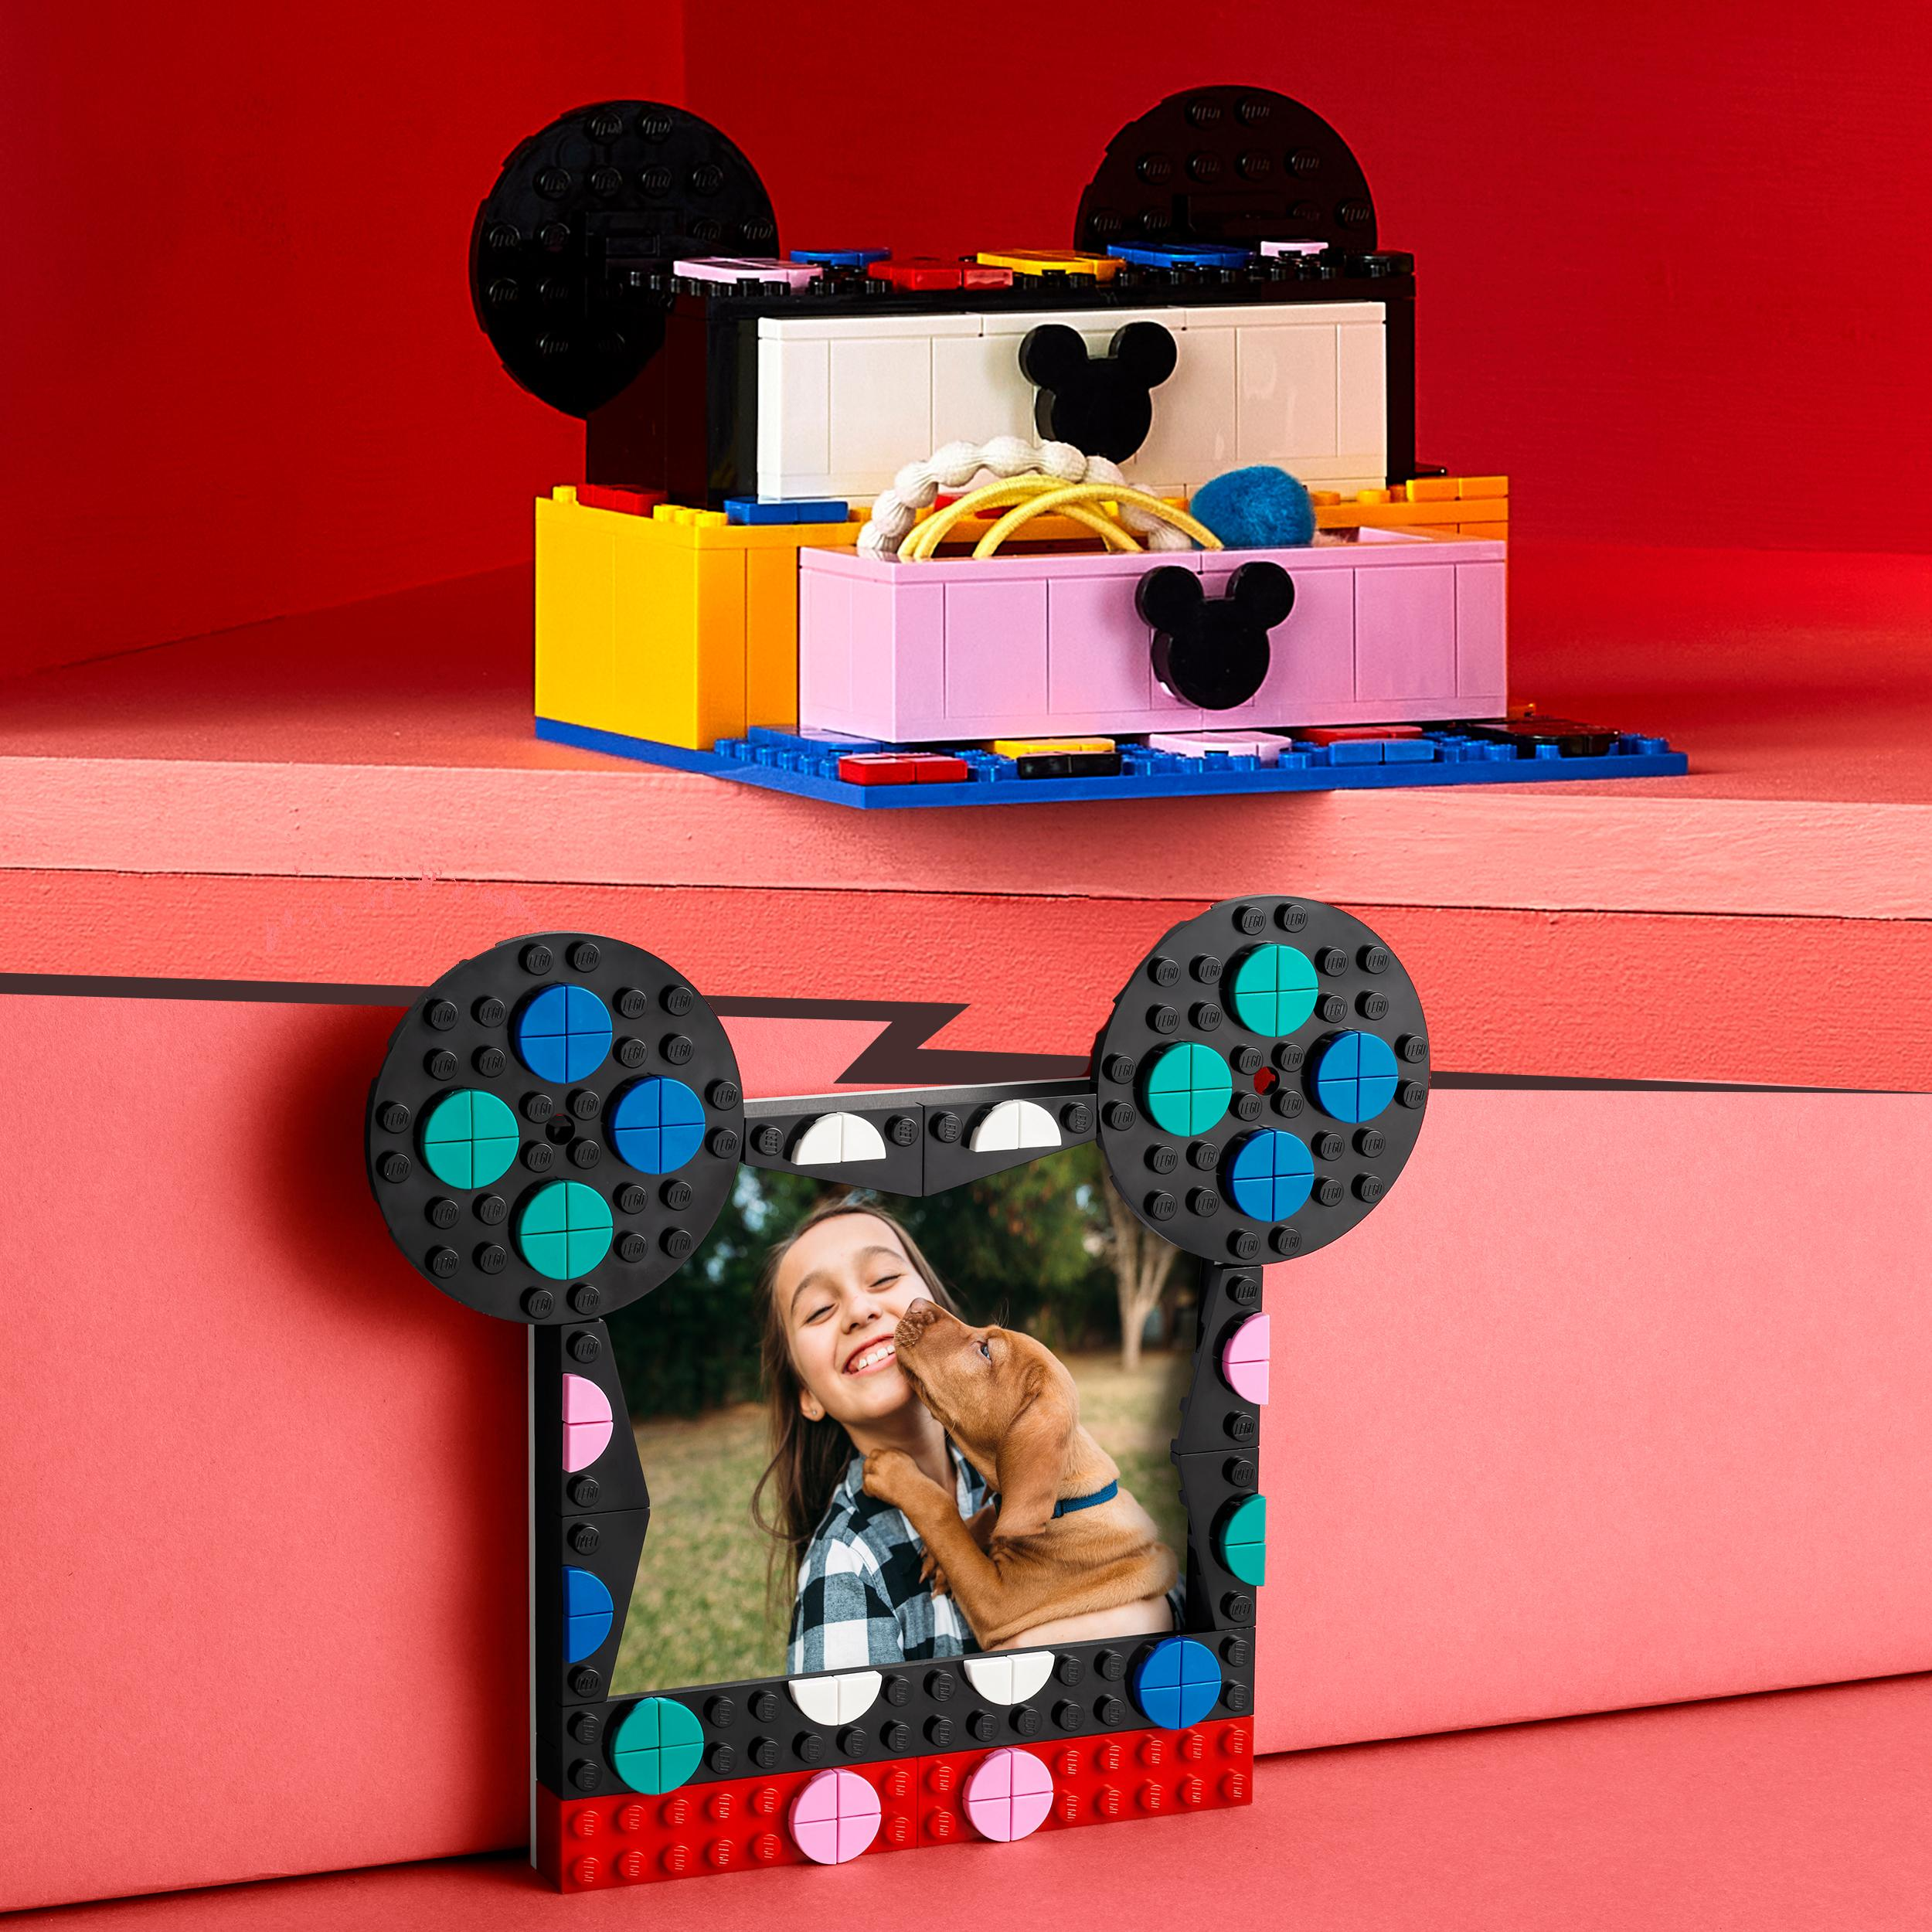 DOTS zum & Bausatz, Micky Mehrfarbig Minnie Kreativbox Schulanfang LEGO 41964